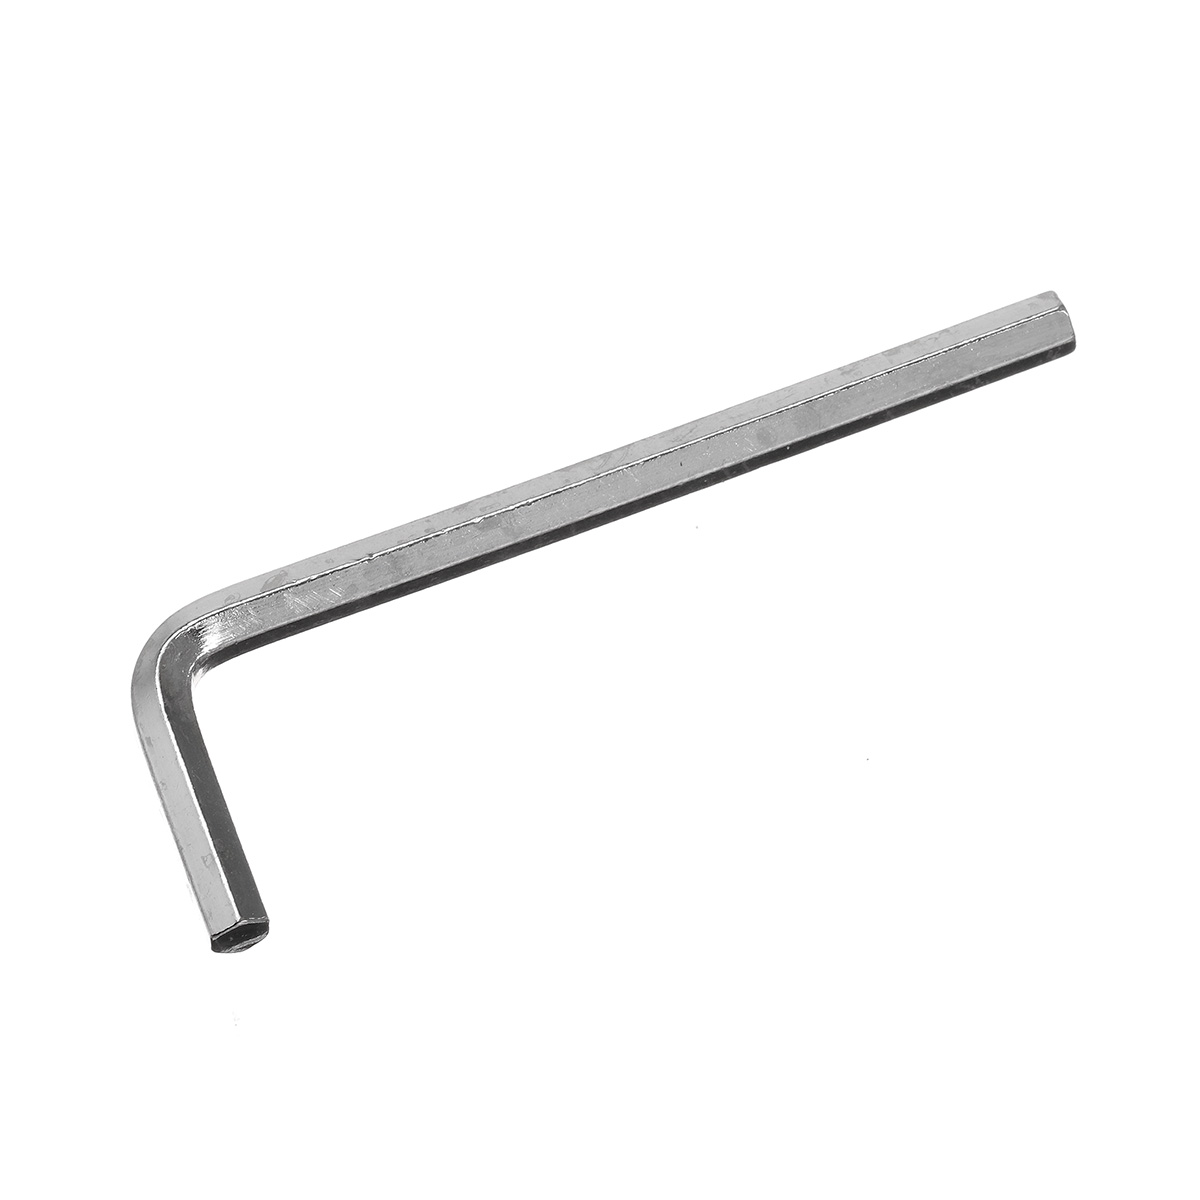 Portable-Spot-Welder-Special-Shape-Metal-Welding-Pliers-18650-Battery-Spot-Welder-Accessories-Metal--1847767-2